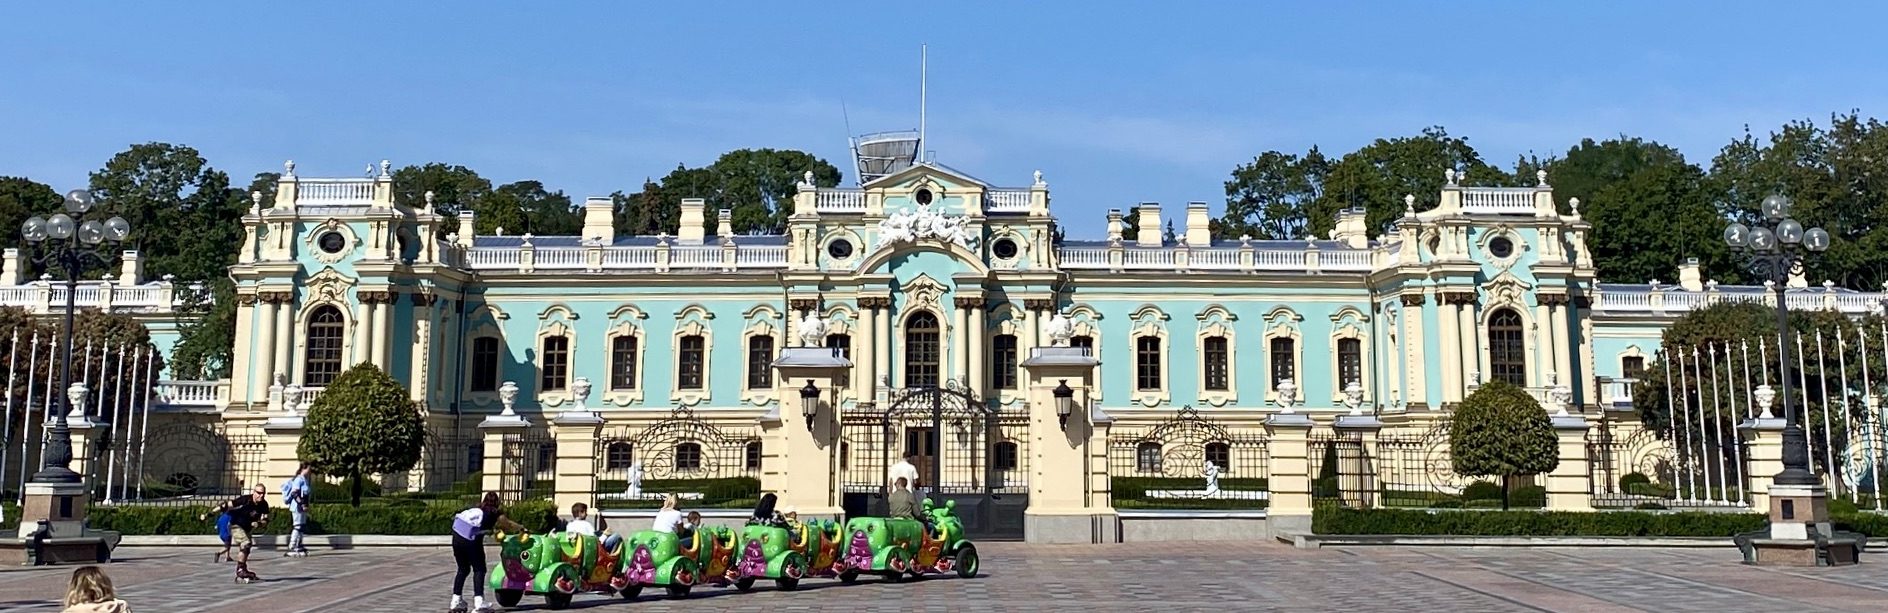 Mariinsky Palace in Kyiv, Ukraine. Photo credit: Luba Rudenko